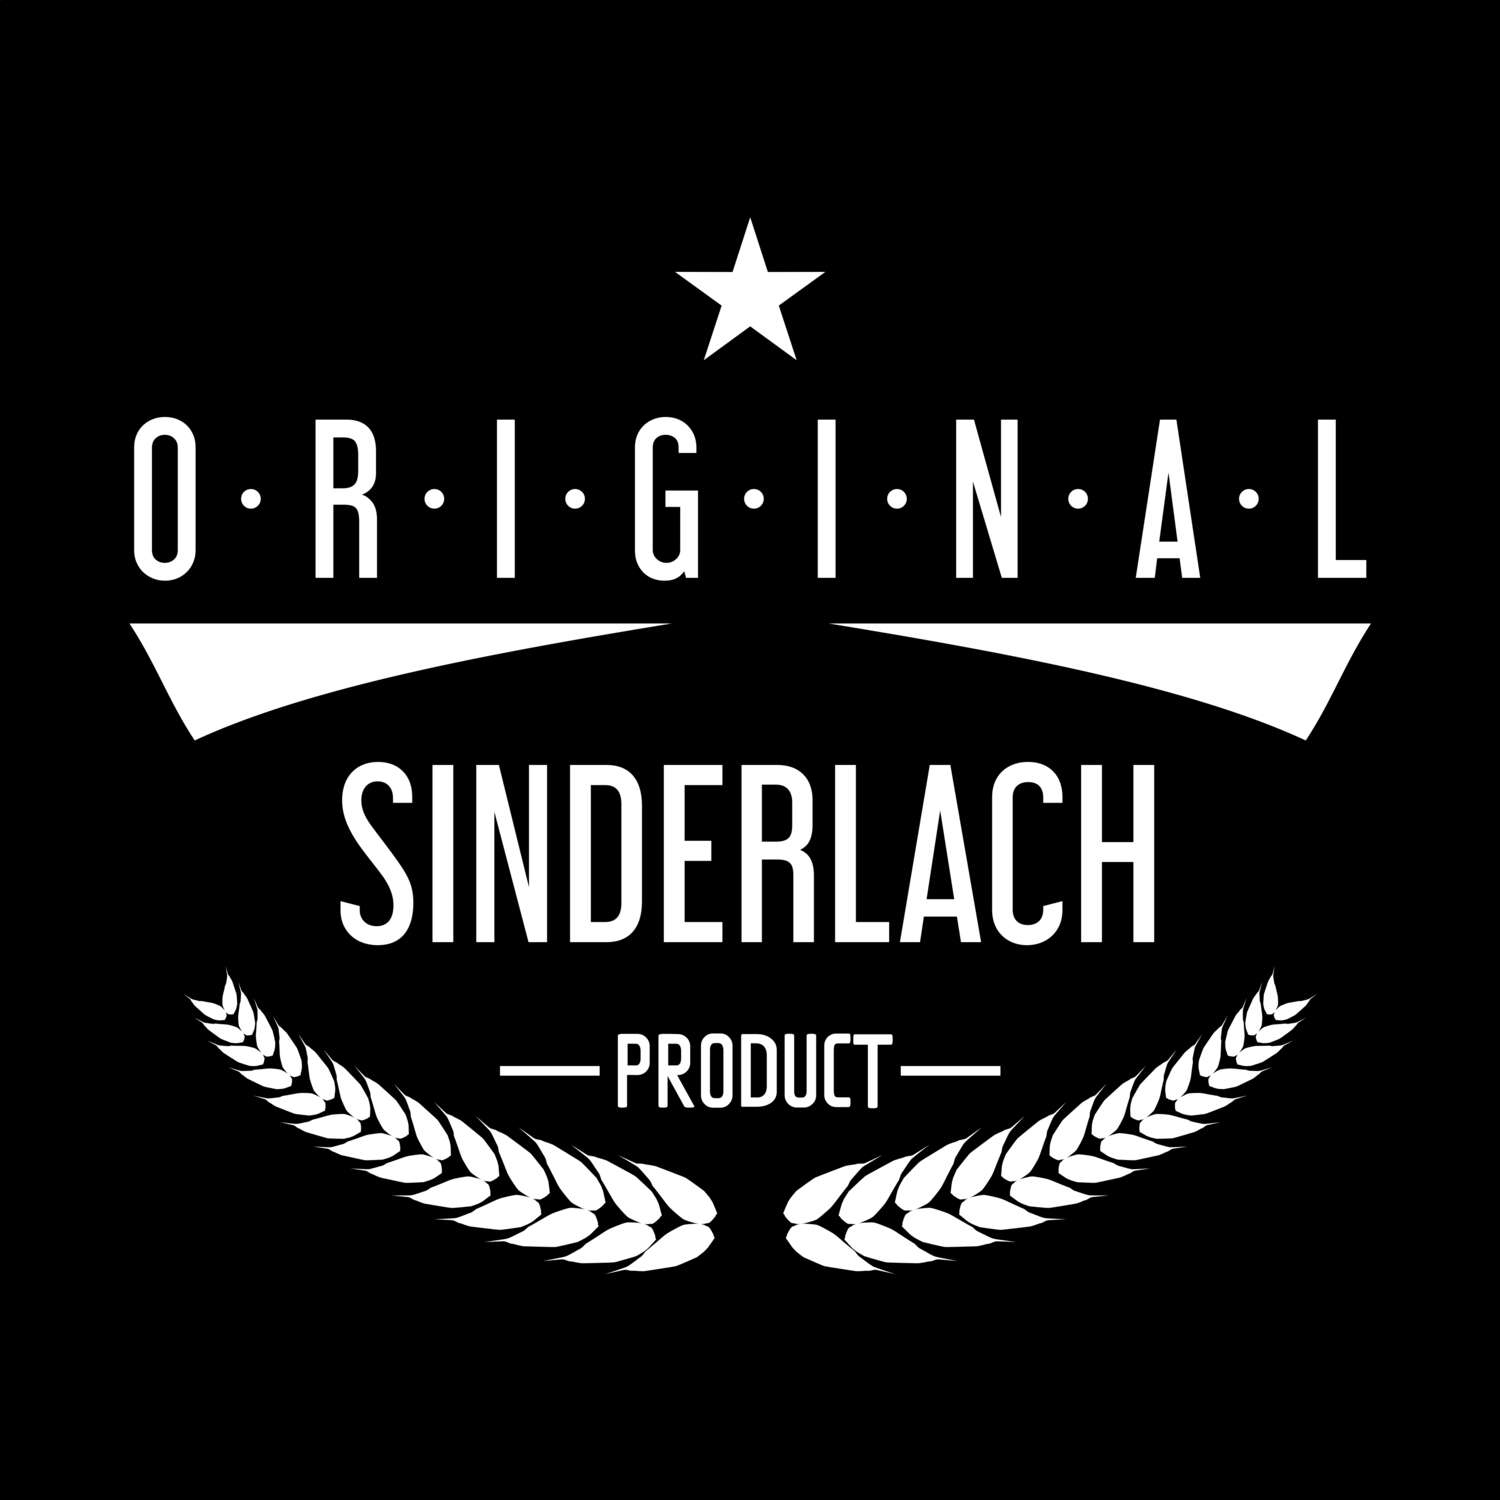 Sinderlach T-Shirt »Original Product«